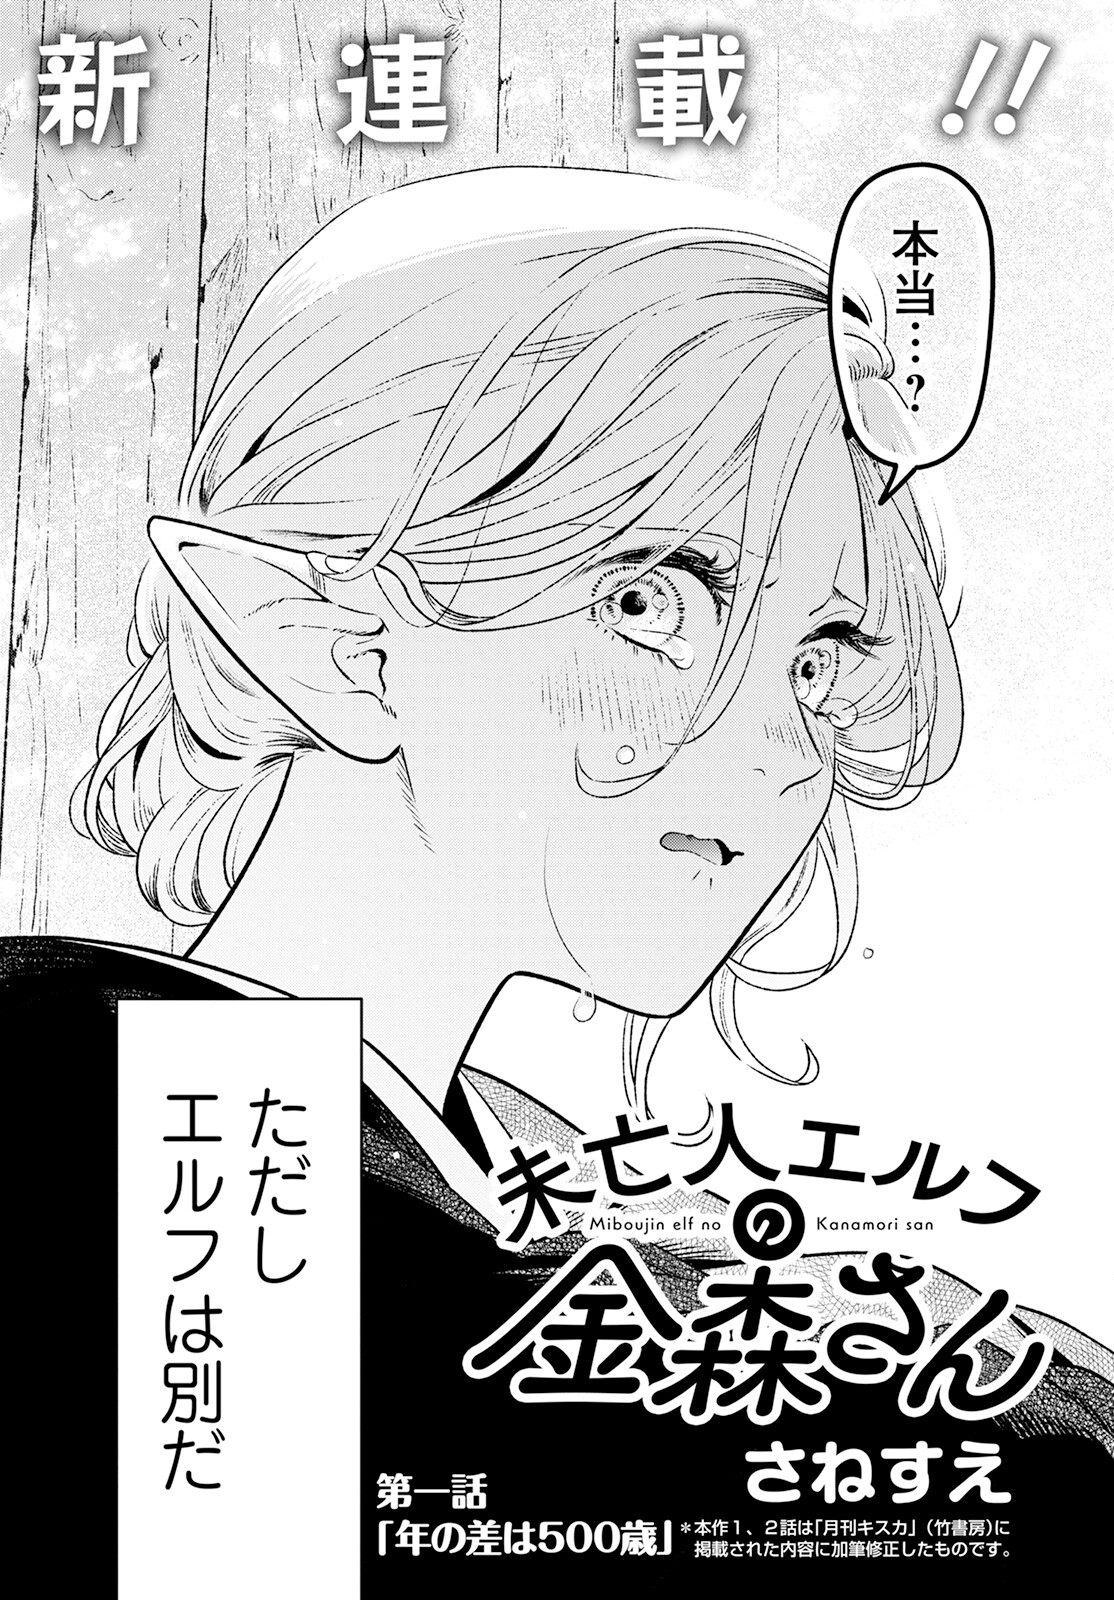 Miboujin Elf no Kanamori-san - Chapter 1 - Page 3